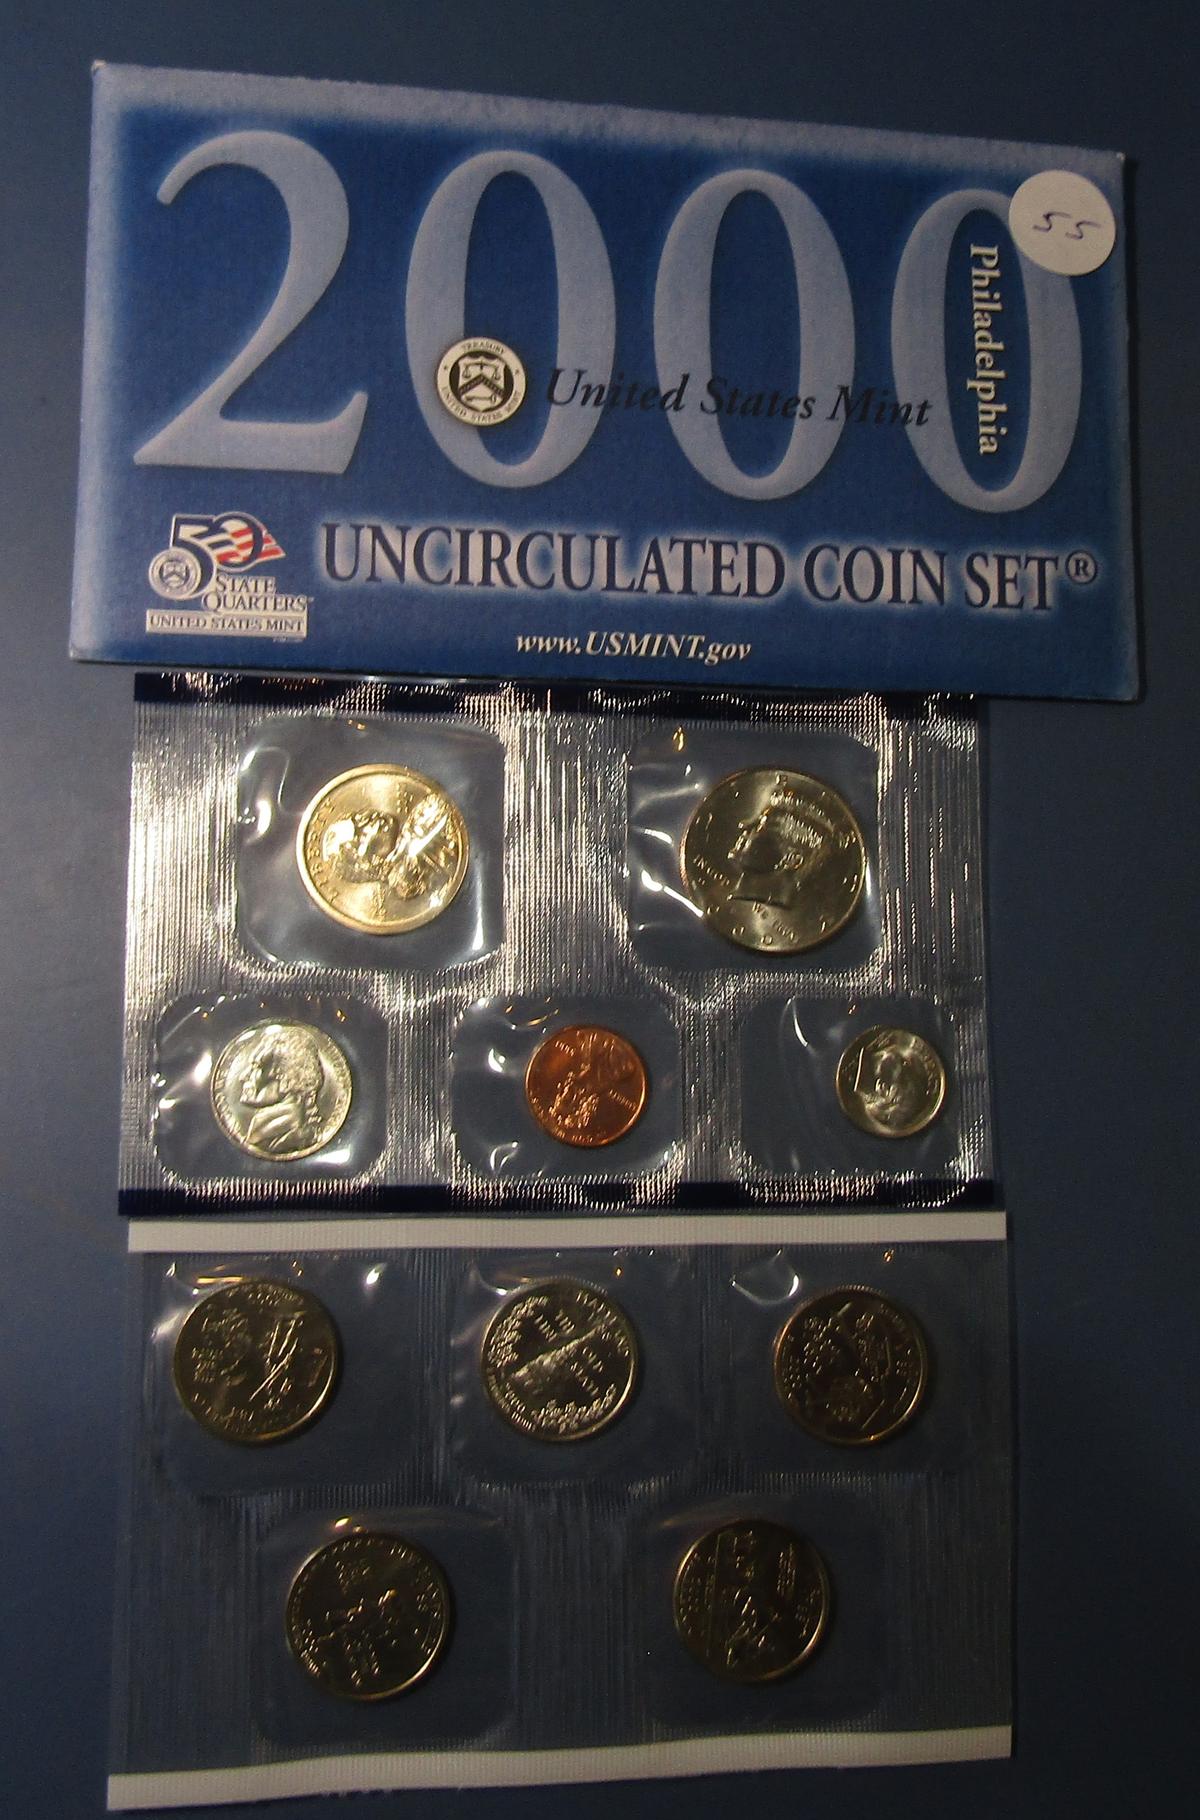 2000 UNCIRCULATED COIN MINT SET